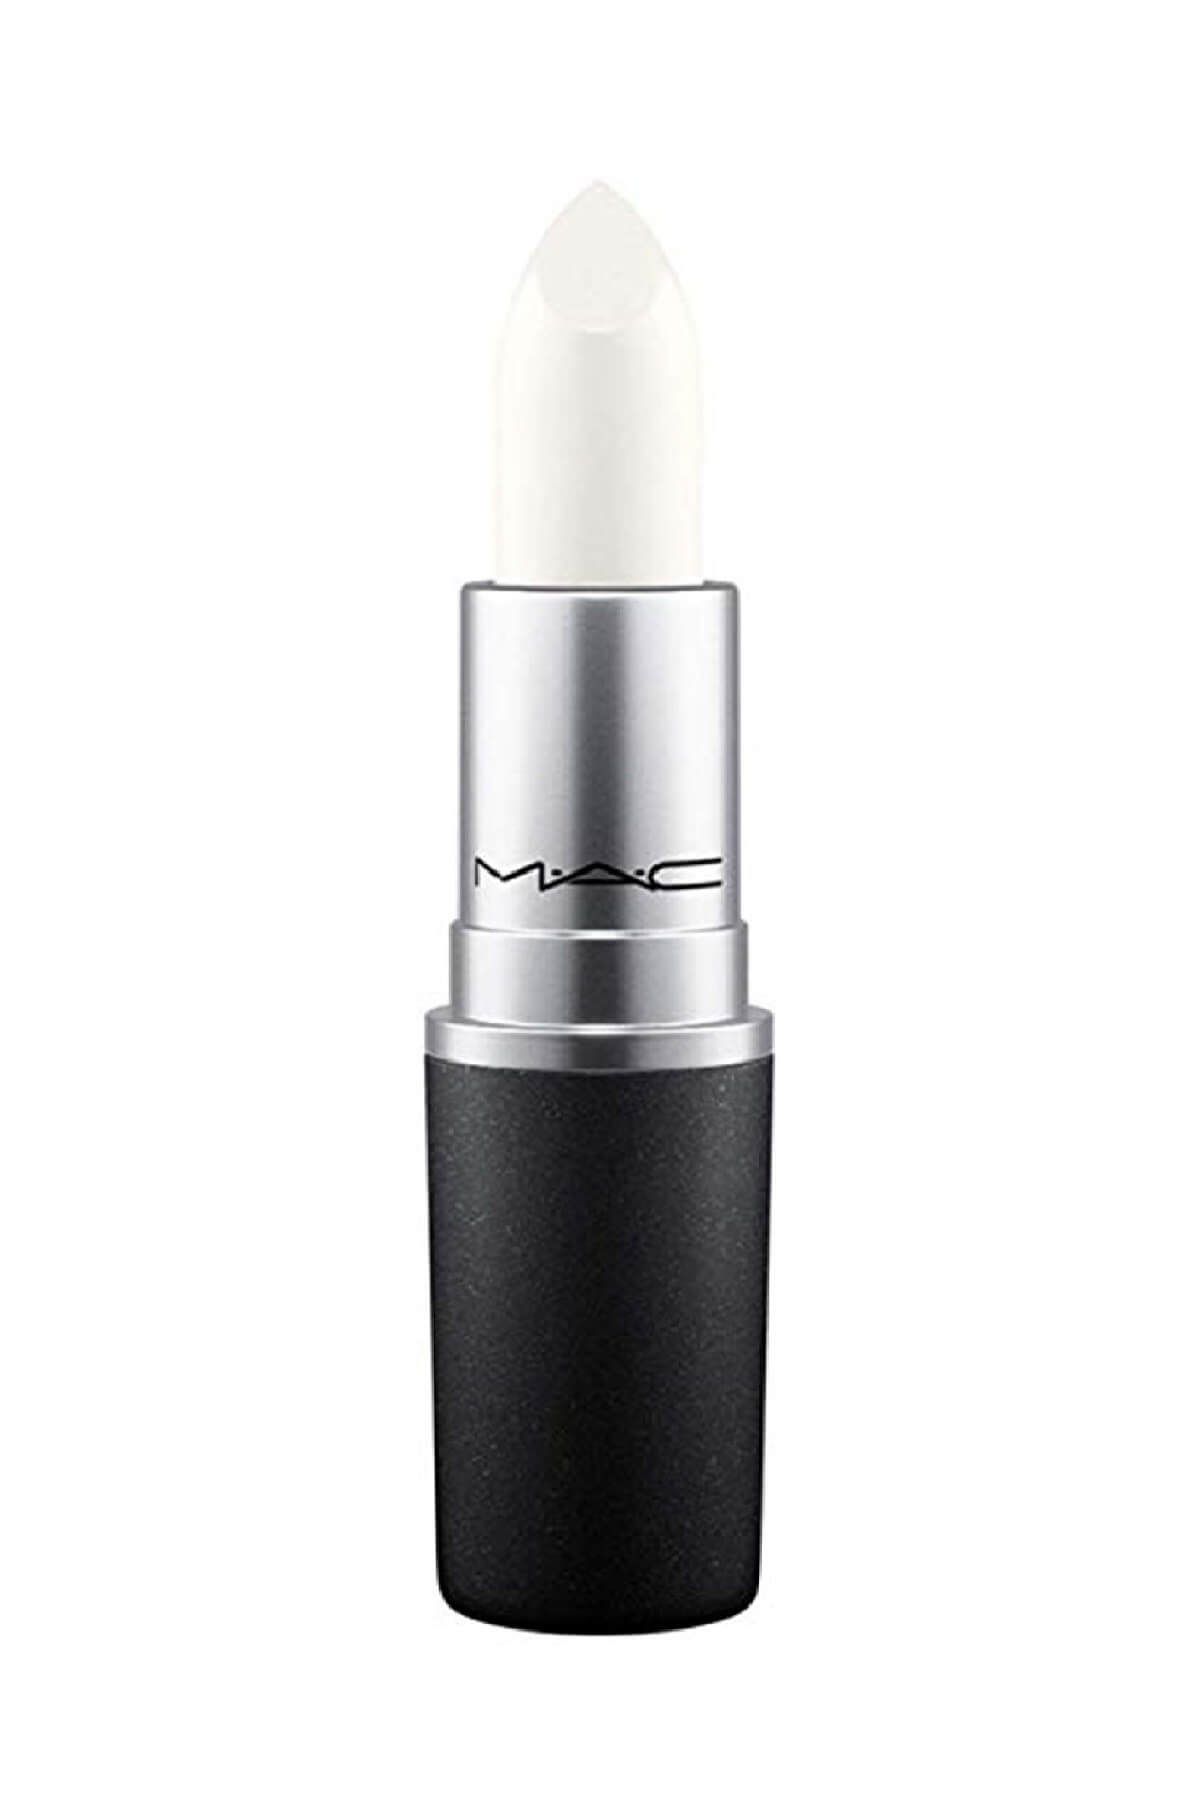 Mac Ruj - Lipstick Frosting 3 g 773602441341